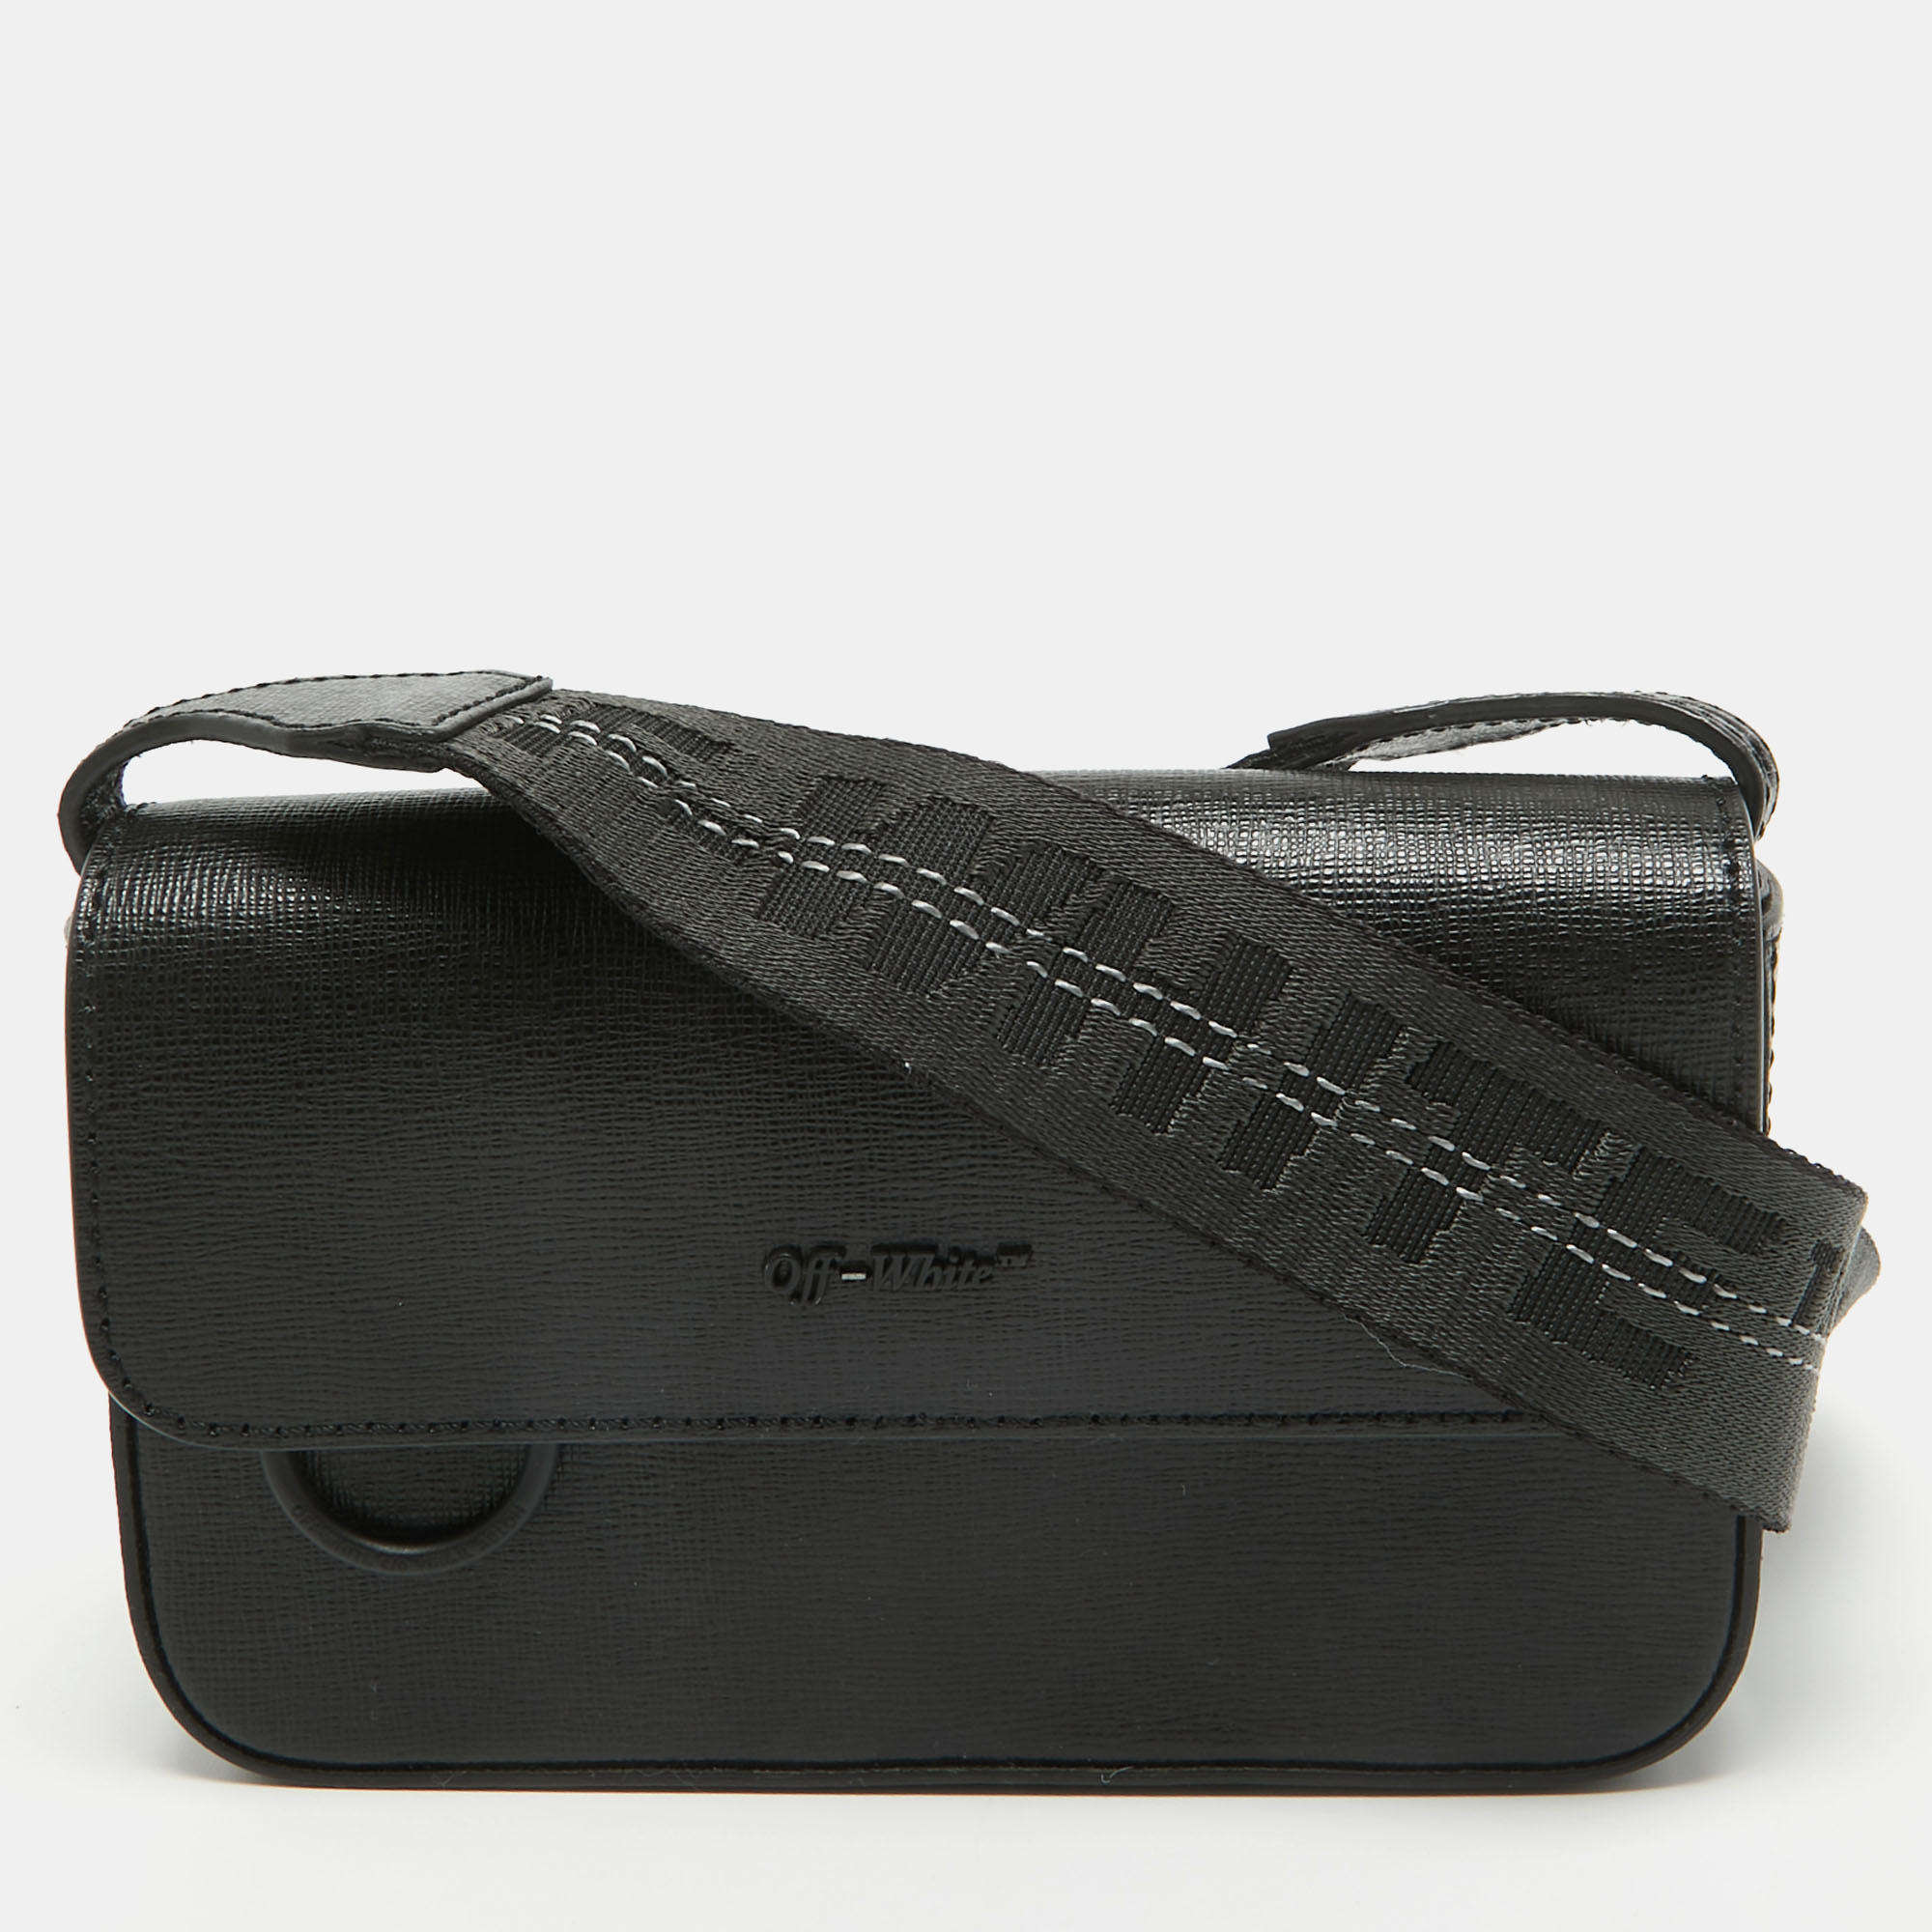 Off-white black leather mini flap crossbody bag